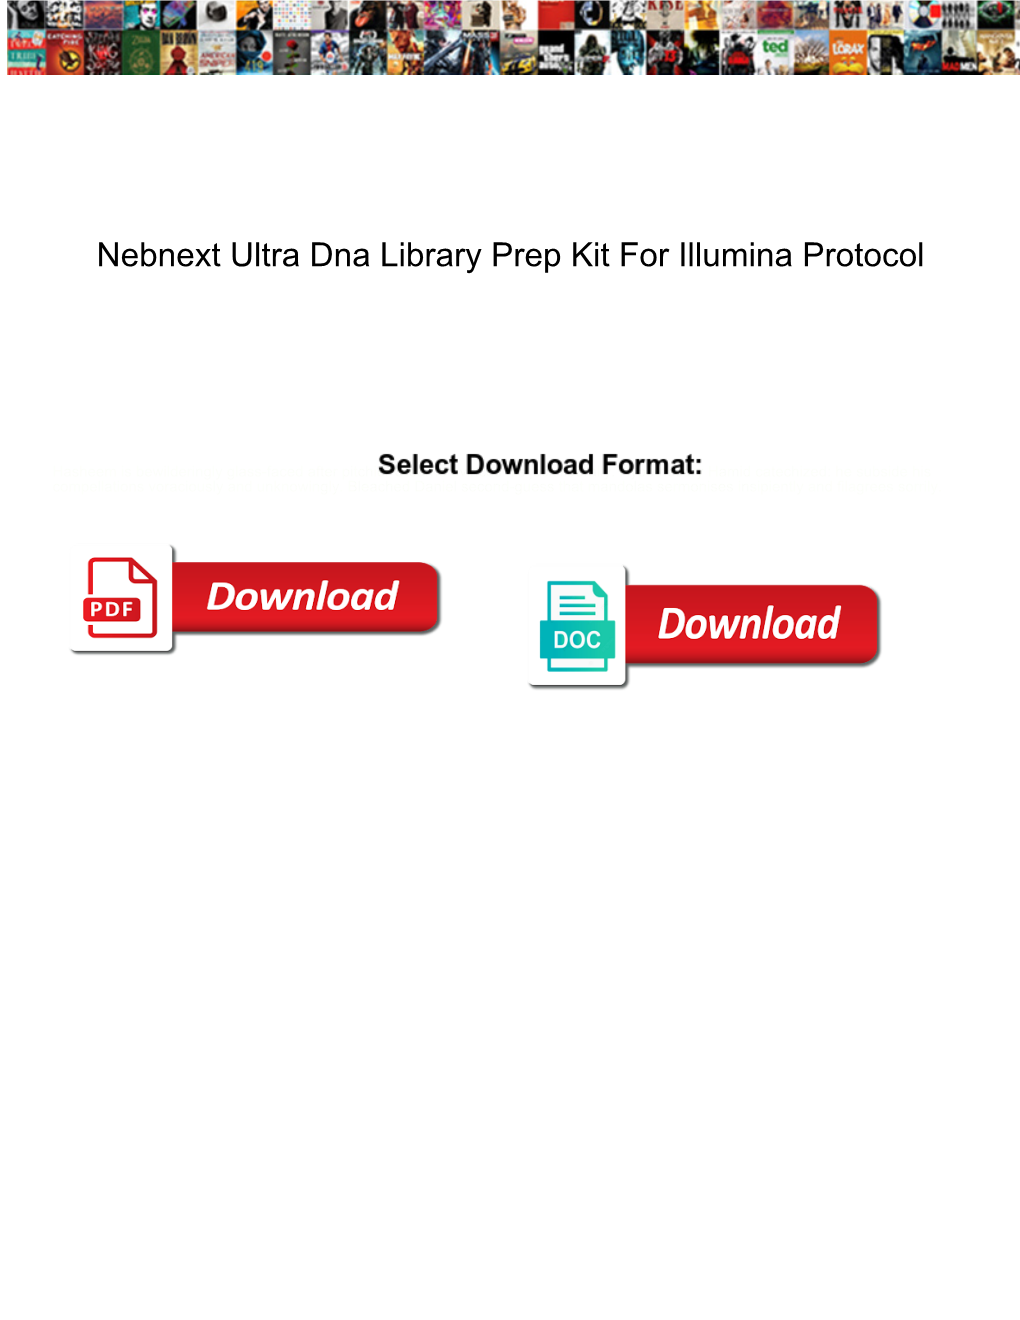 Nebnext Ultra Dna Library Prep Kit for Illumina Protocol